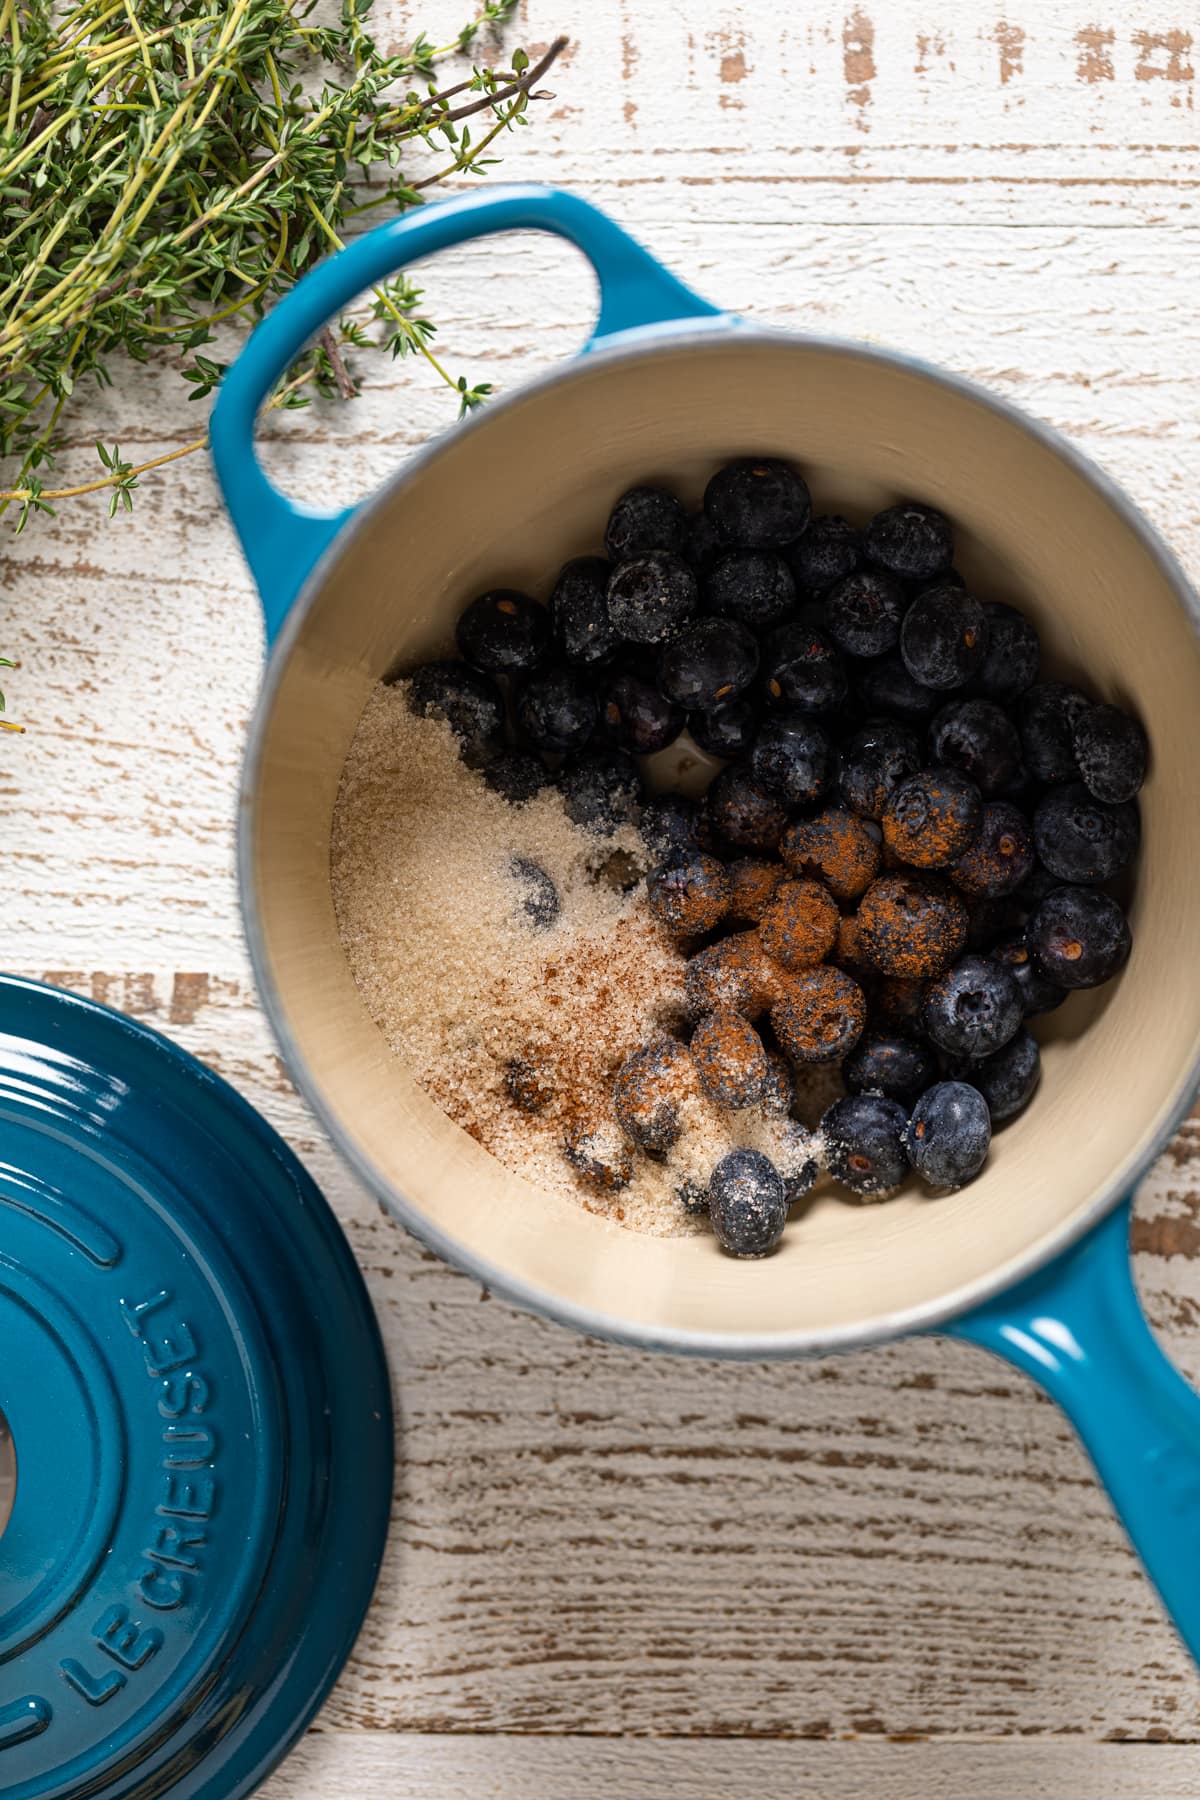 Blueberries and seasonings in a blue Le Creuset pan